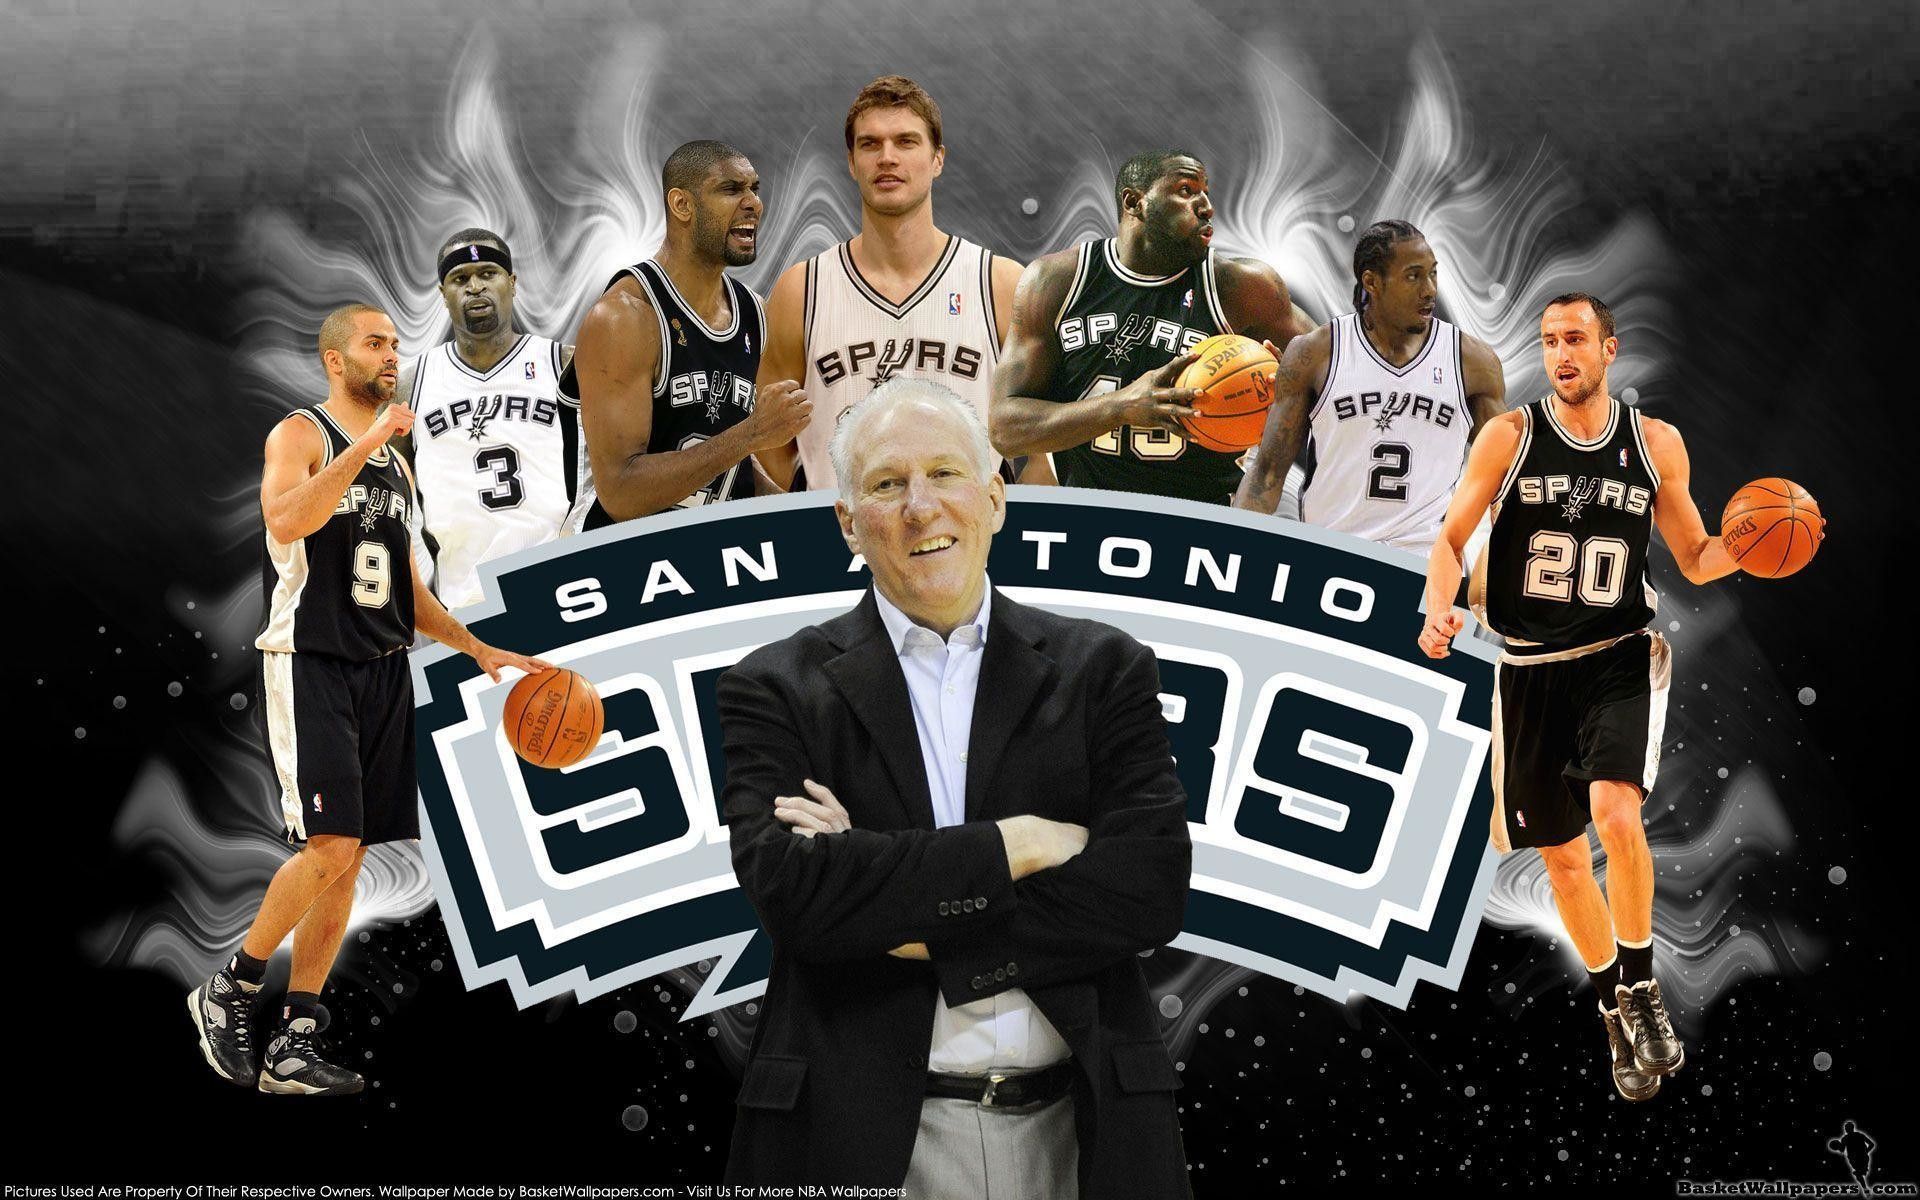 San Antonio Spurs Finals wallpaper by michaelherradura on DeviantArt